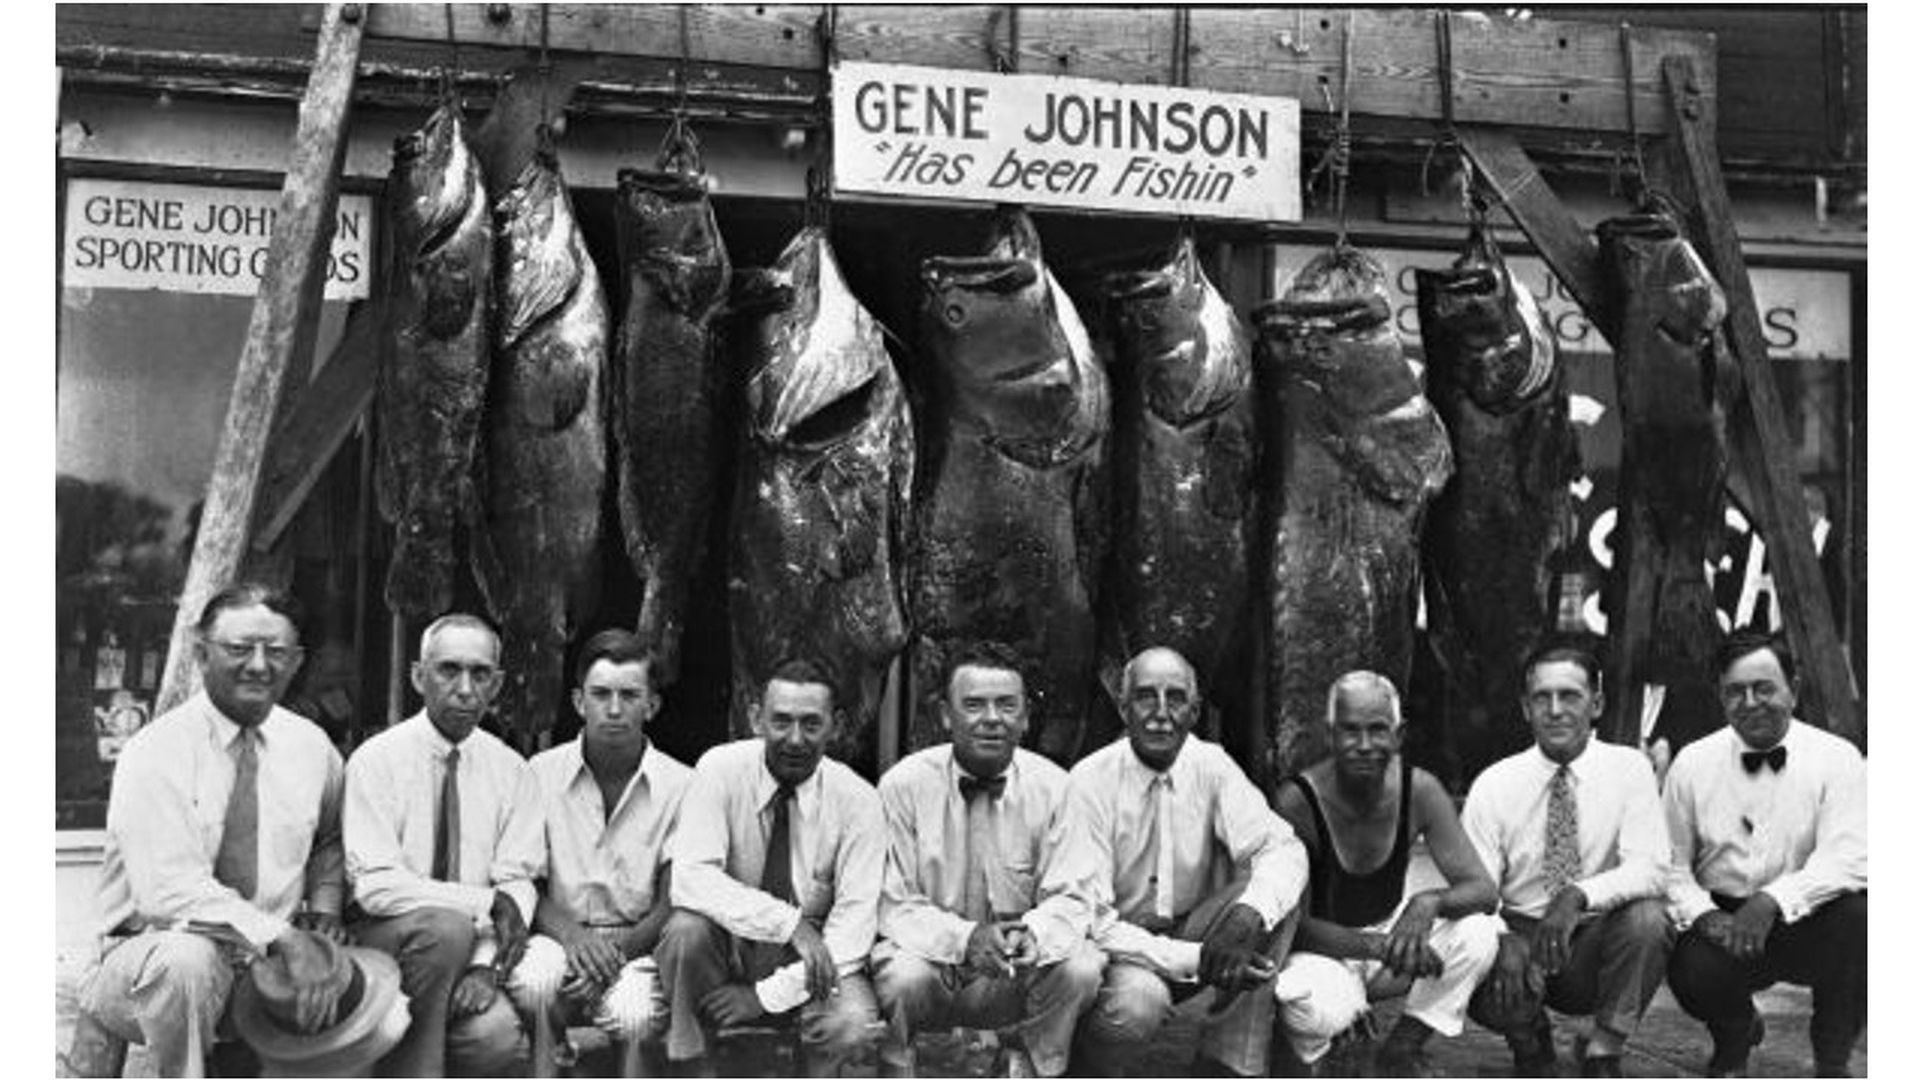 Atlantic goliath grouper caught in the Halifax River displayed at Gene Johnson's Tackle Shop - Daytona Beach, Florida. 1920